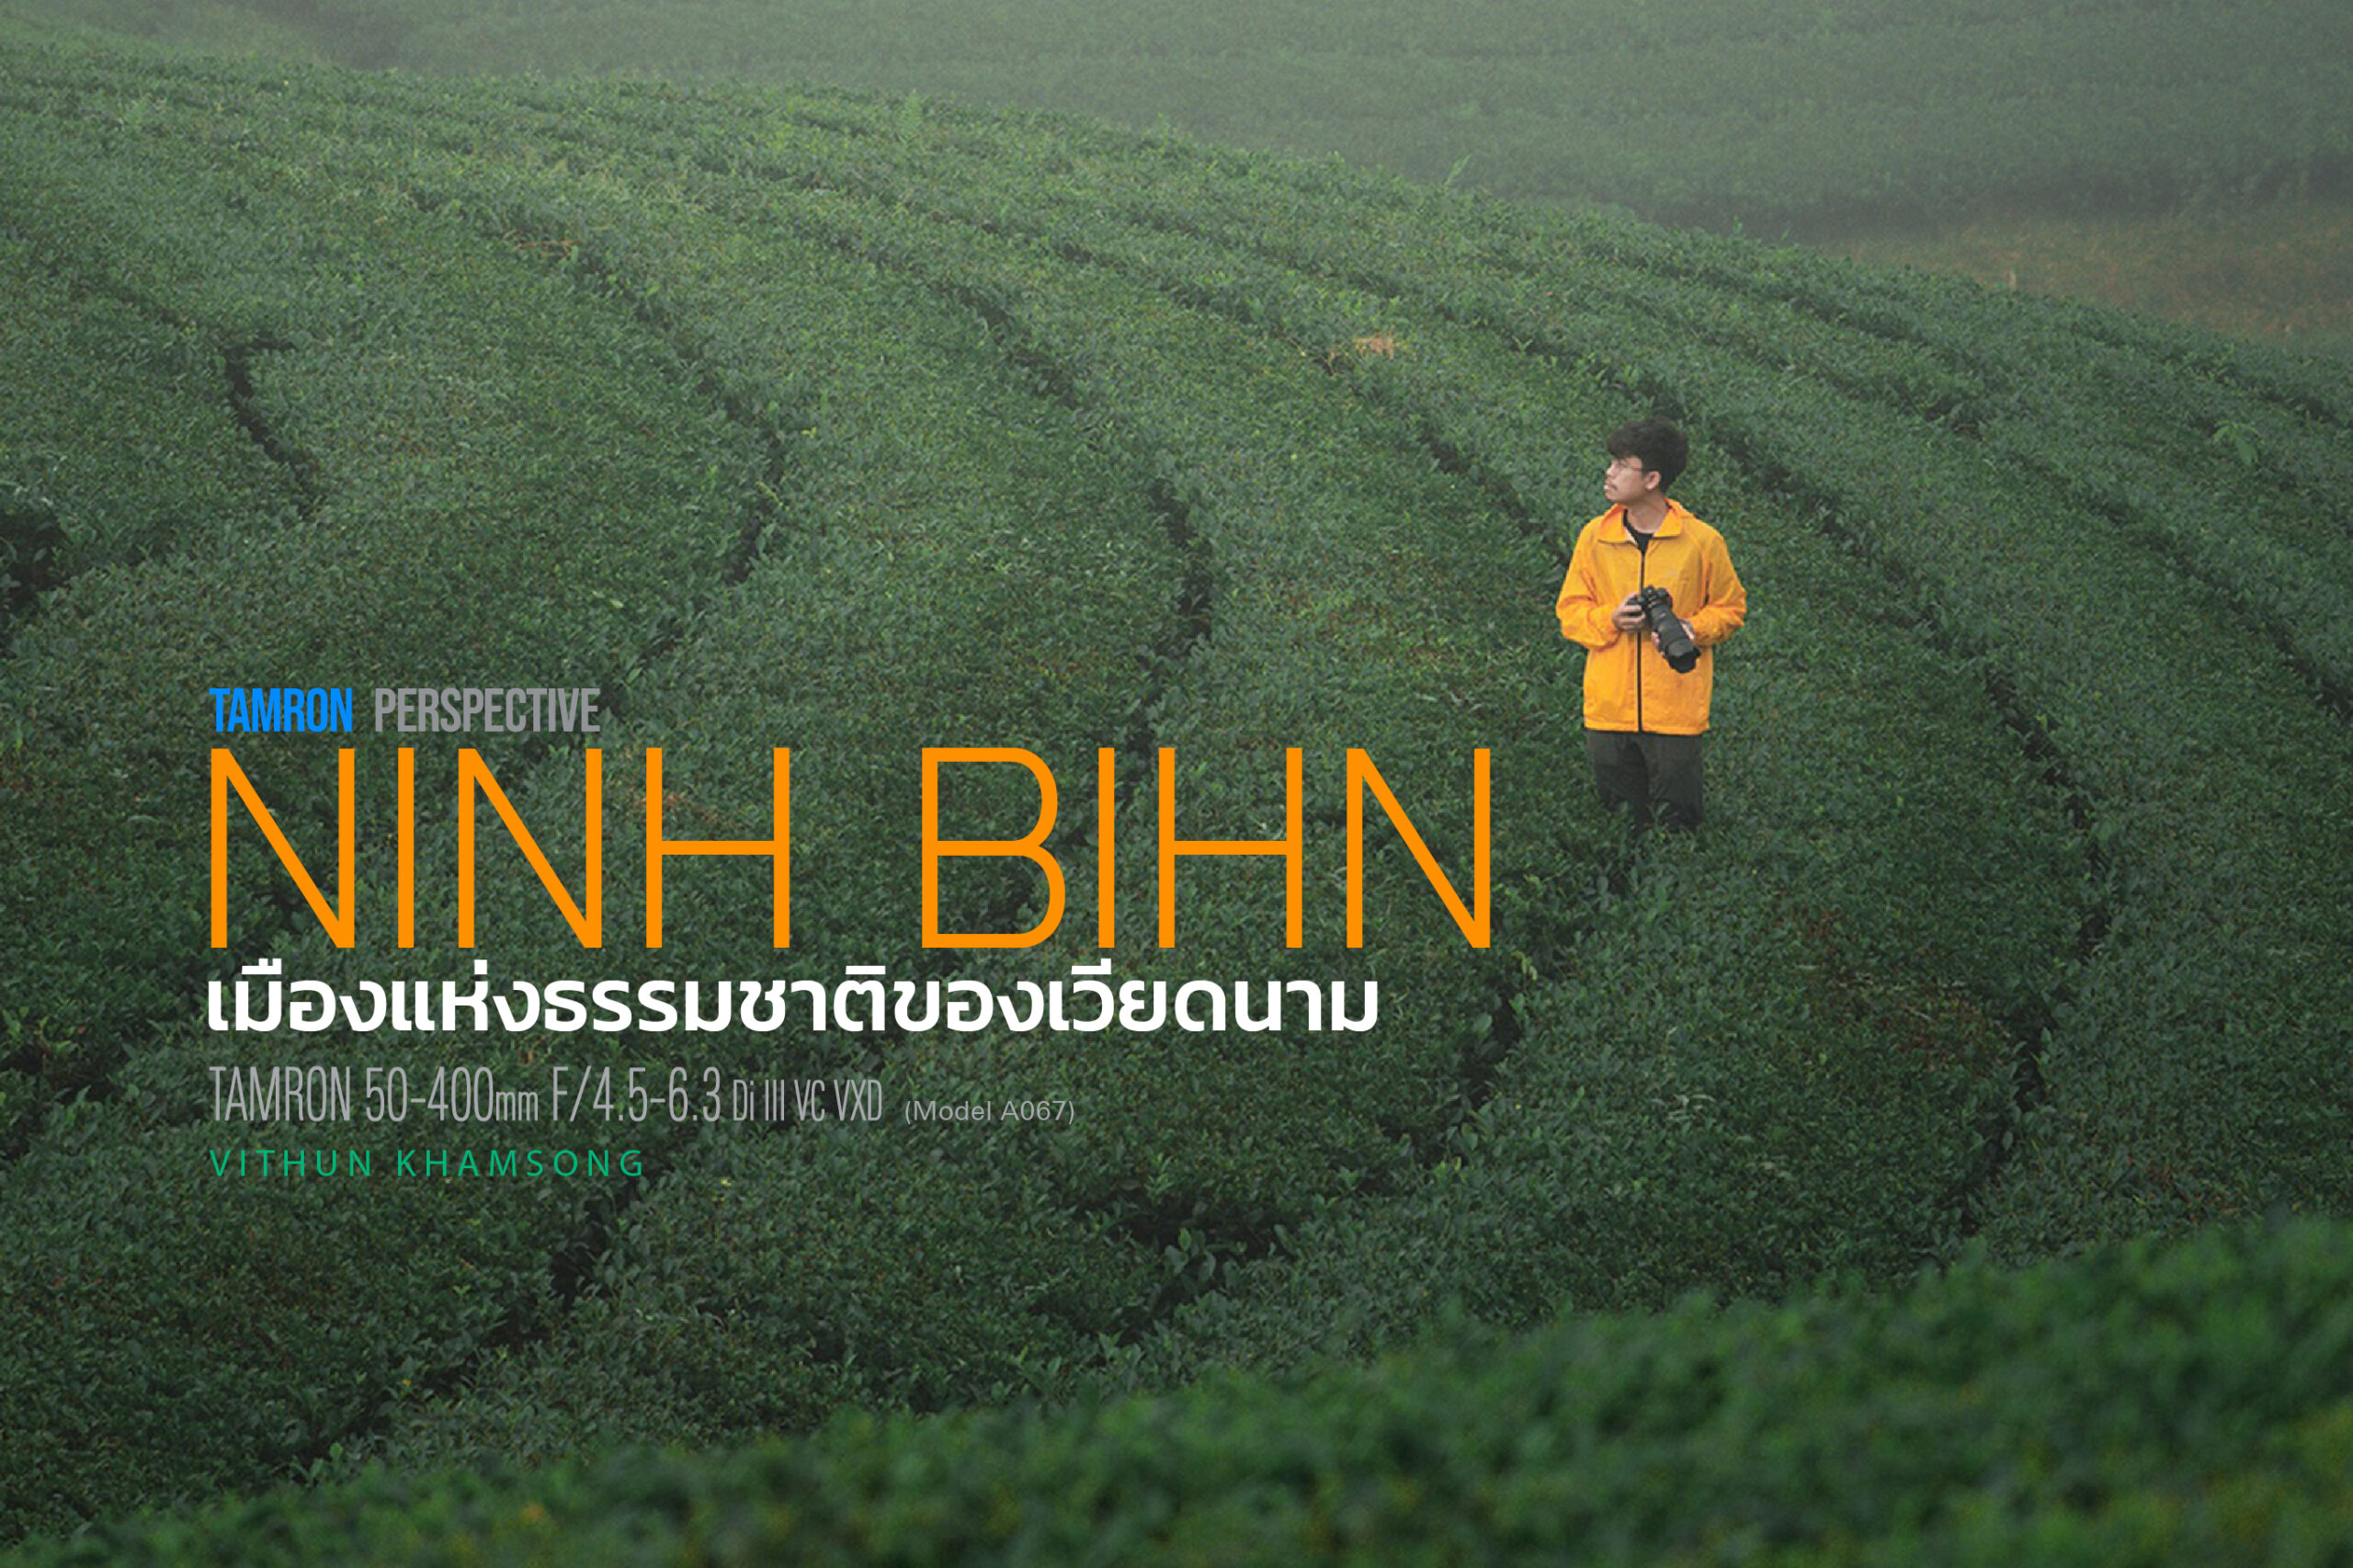 TAMRON PERSPECTIVE : NINH BIHN เมืองแห่งธรรมชาติของเวียดนาม